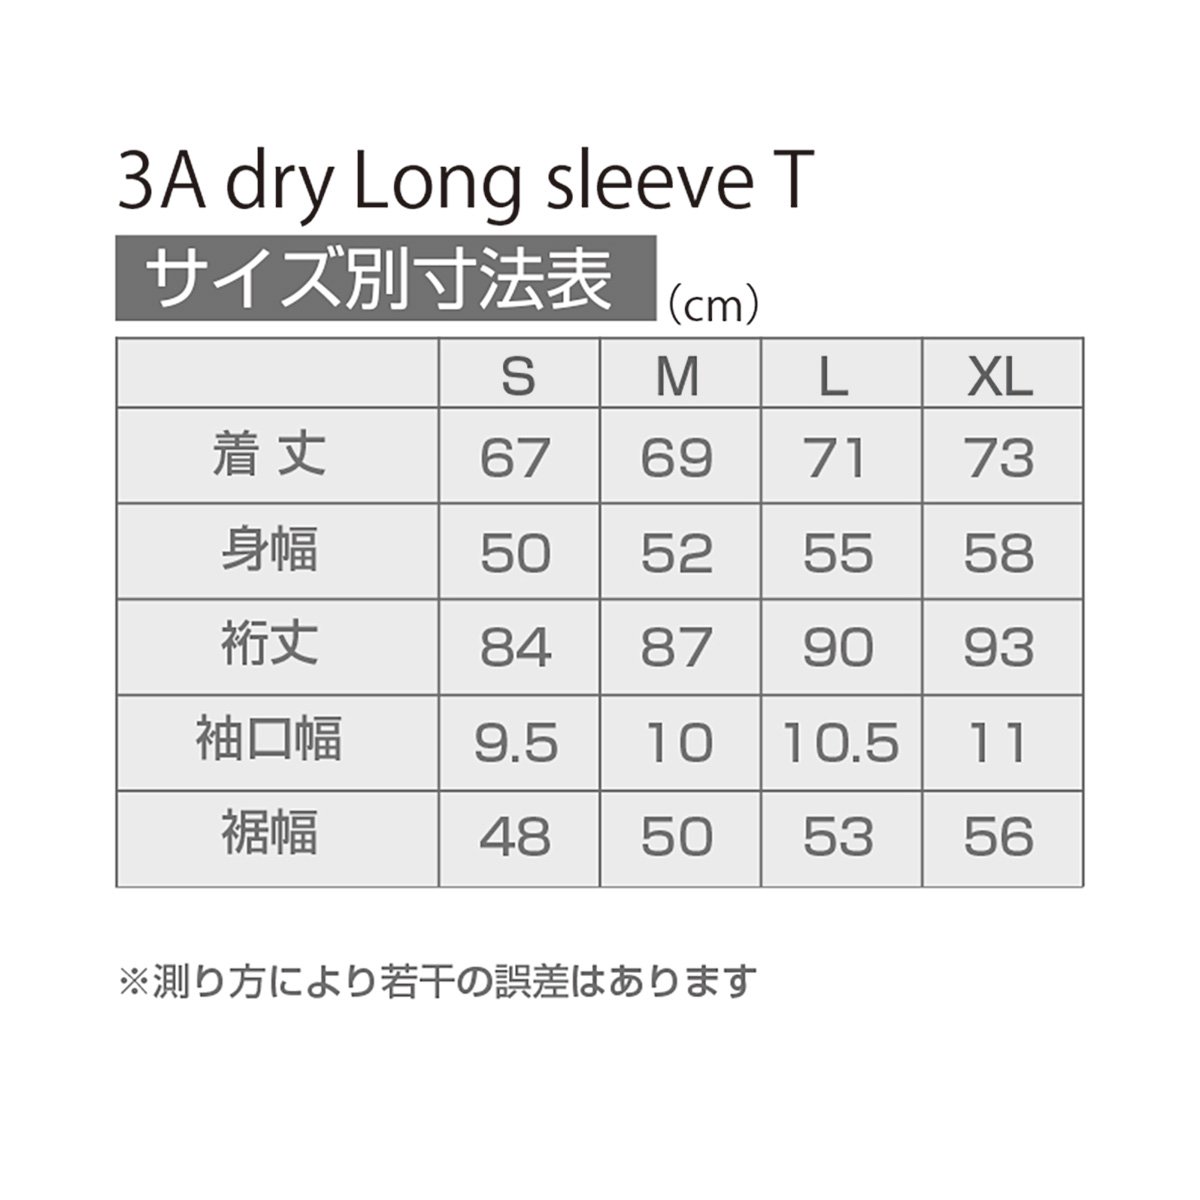 3A dry Long sleeve T